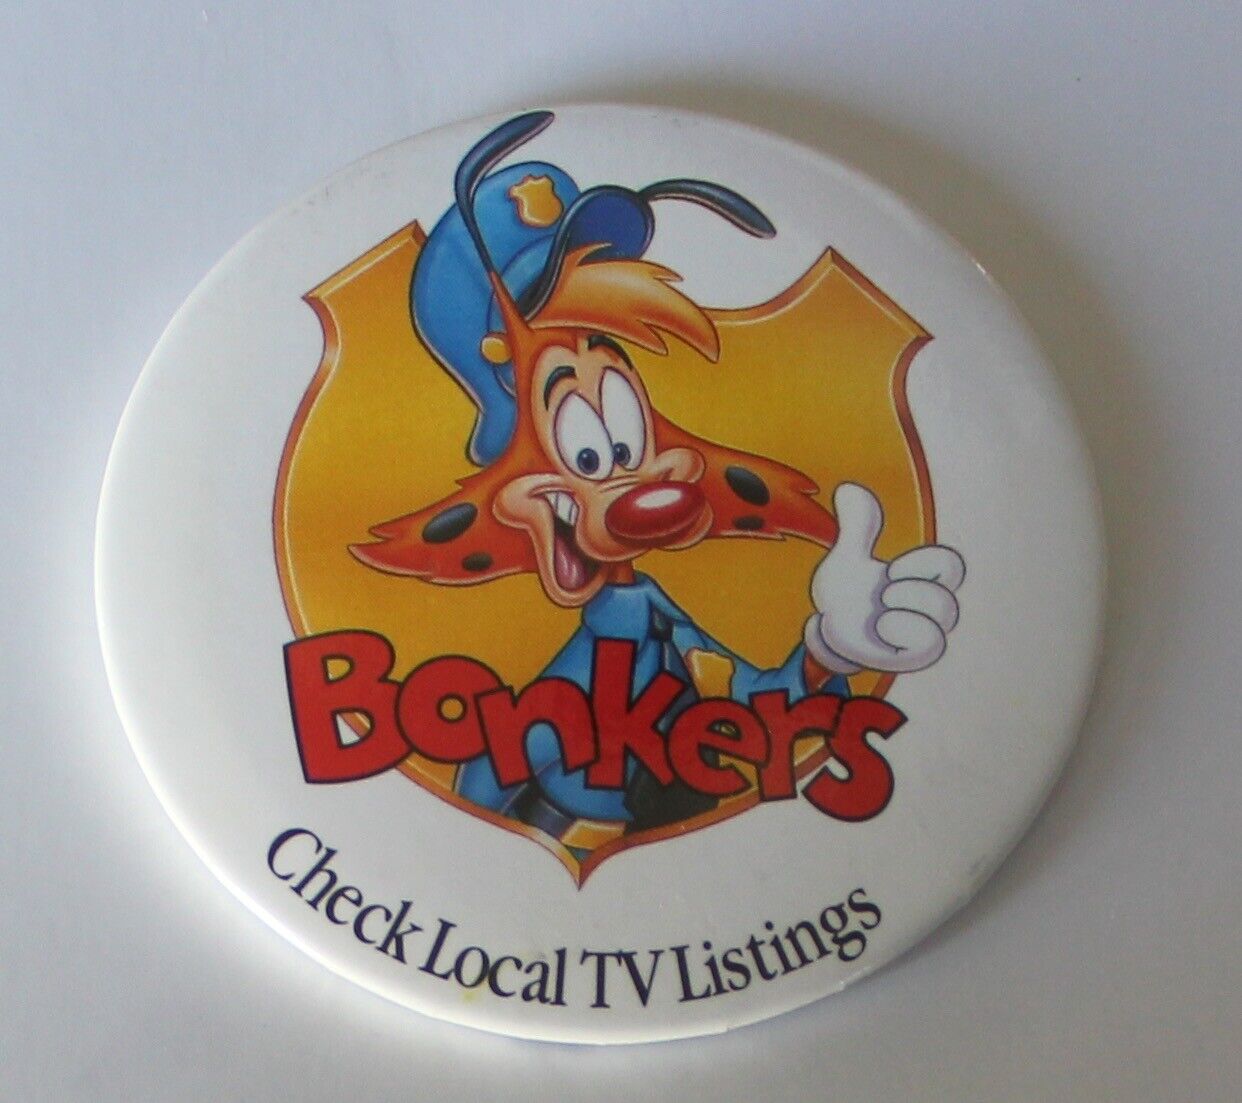 Disneyland Disney\'s Bonkers Check TV listings 1993 Pinback Button Vintage 